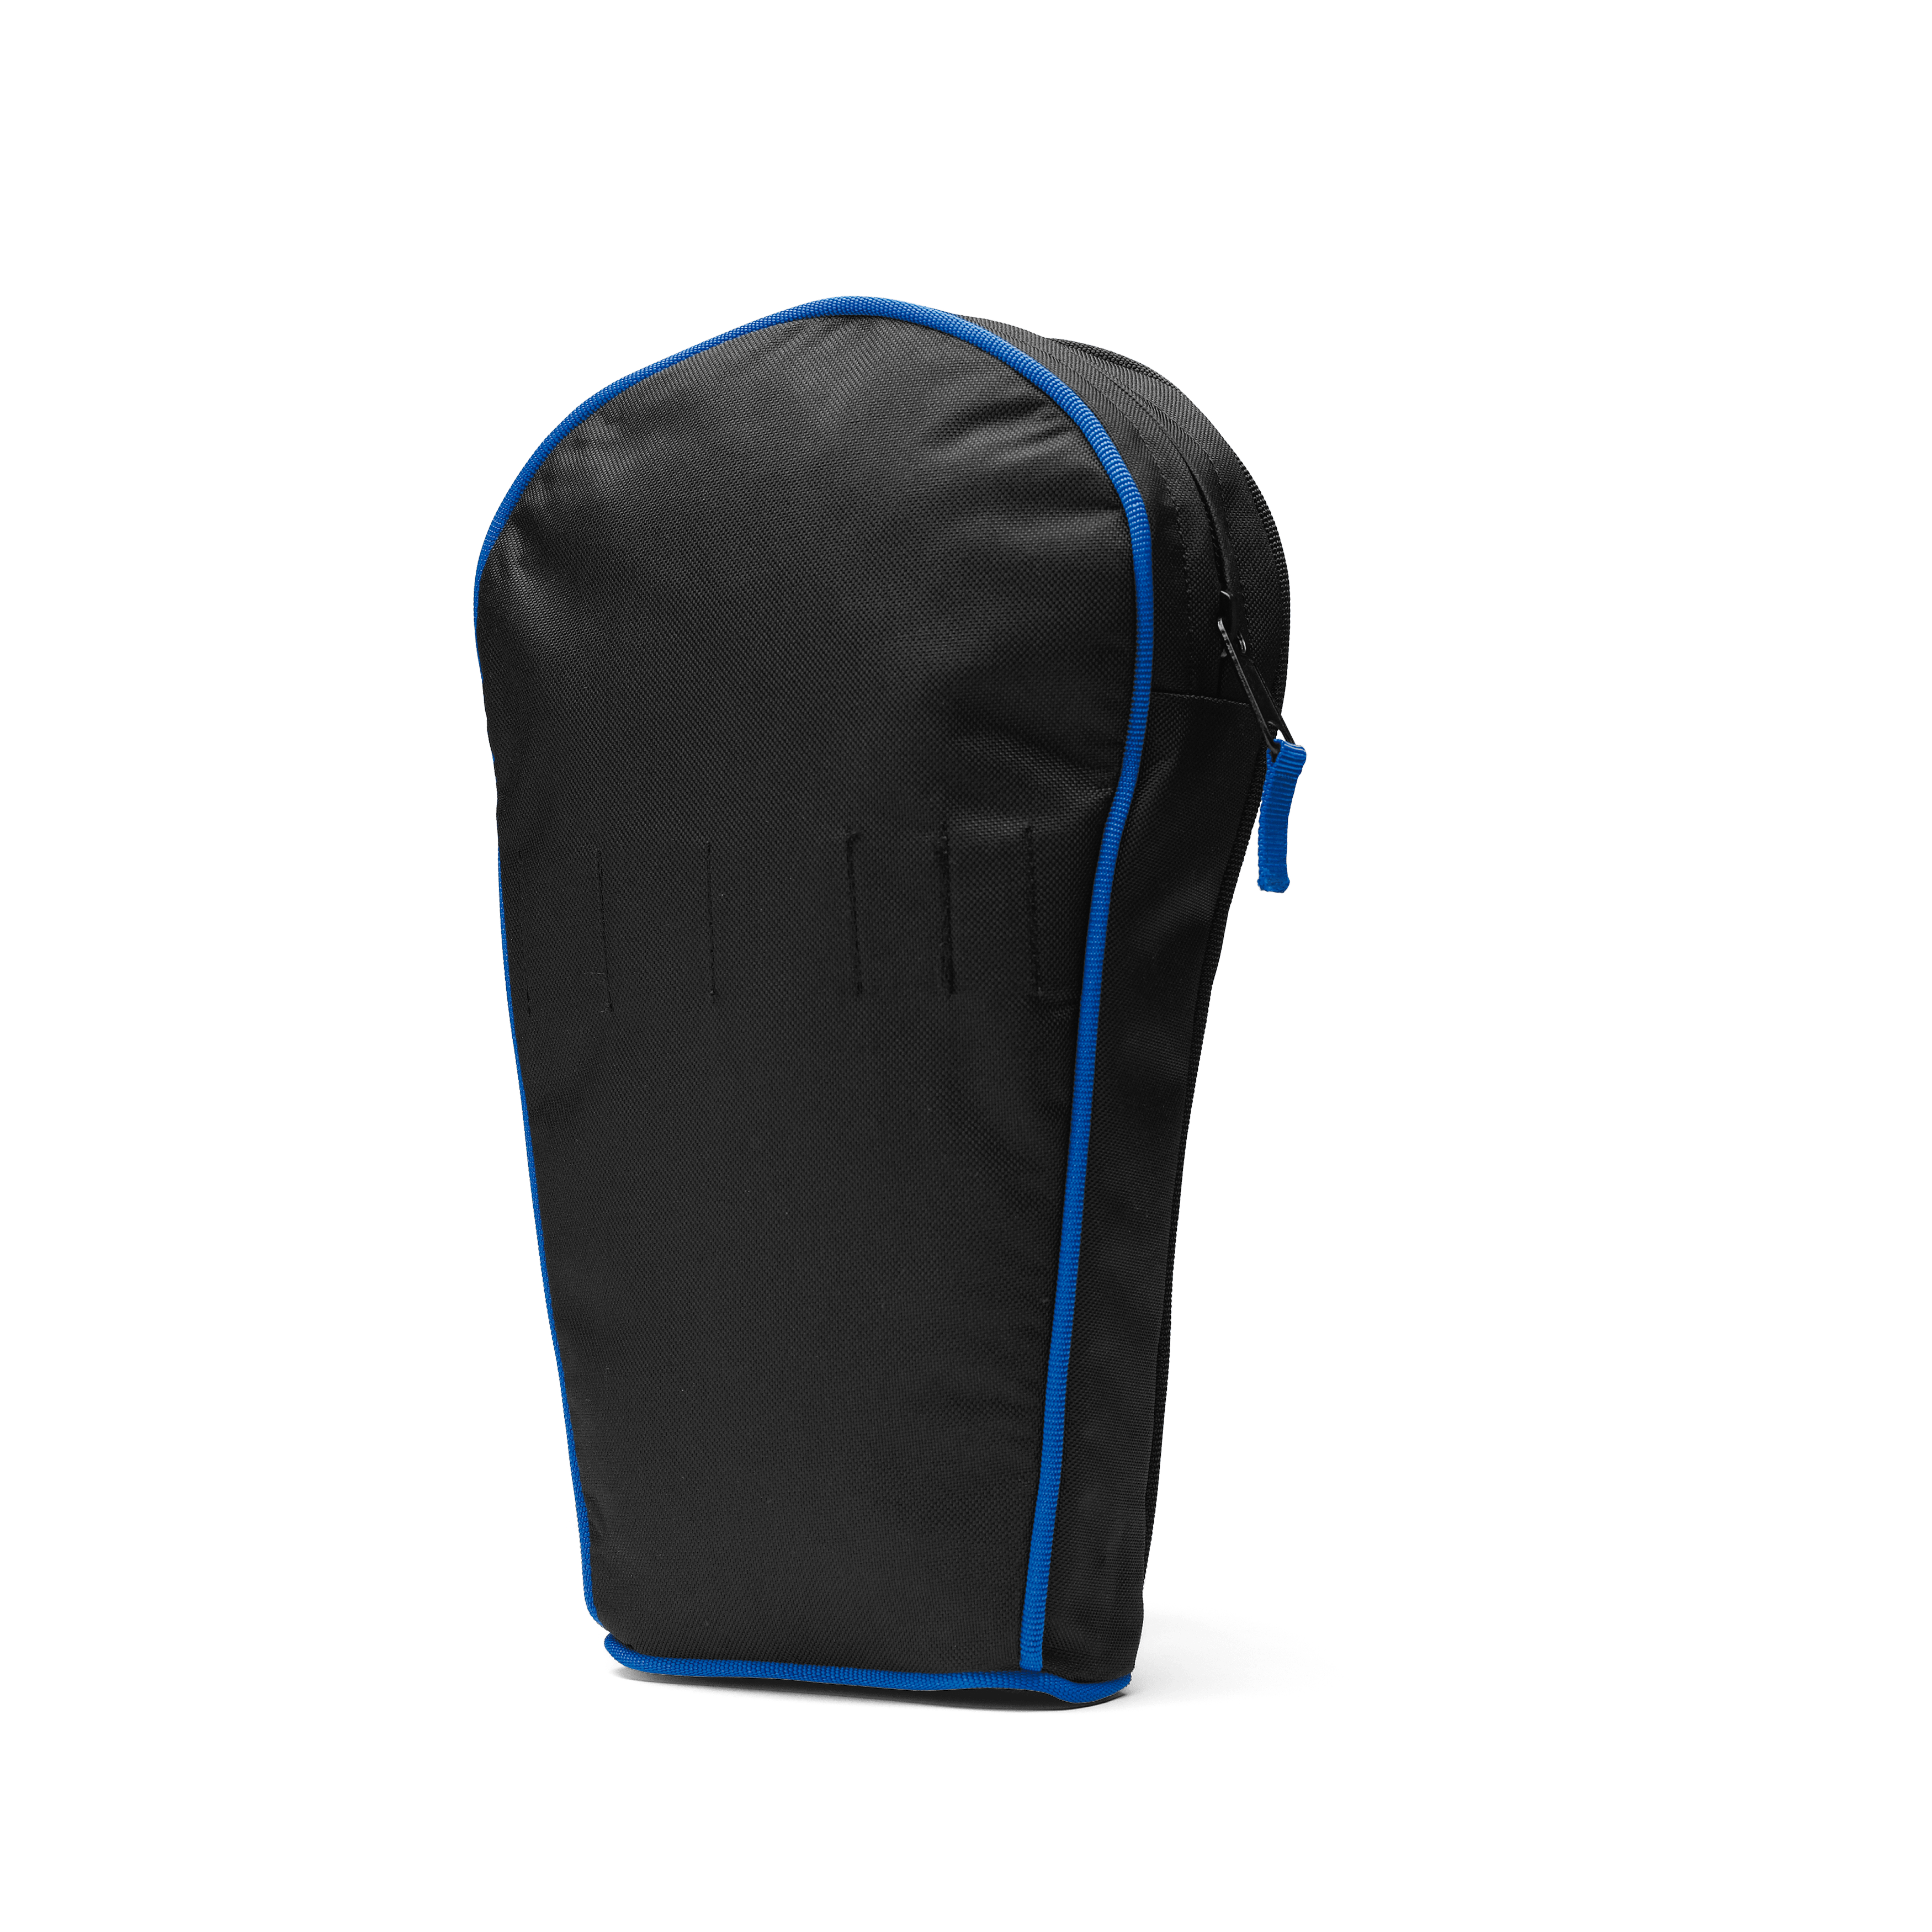 Tool bag for harness Trio-Balance